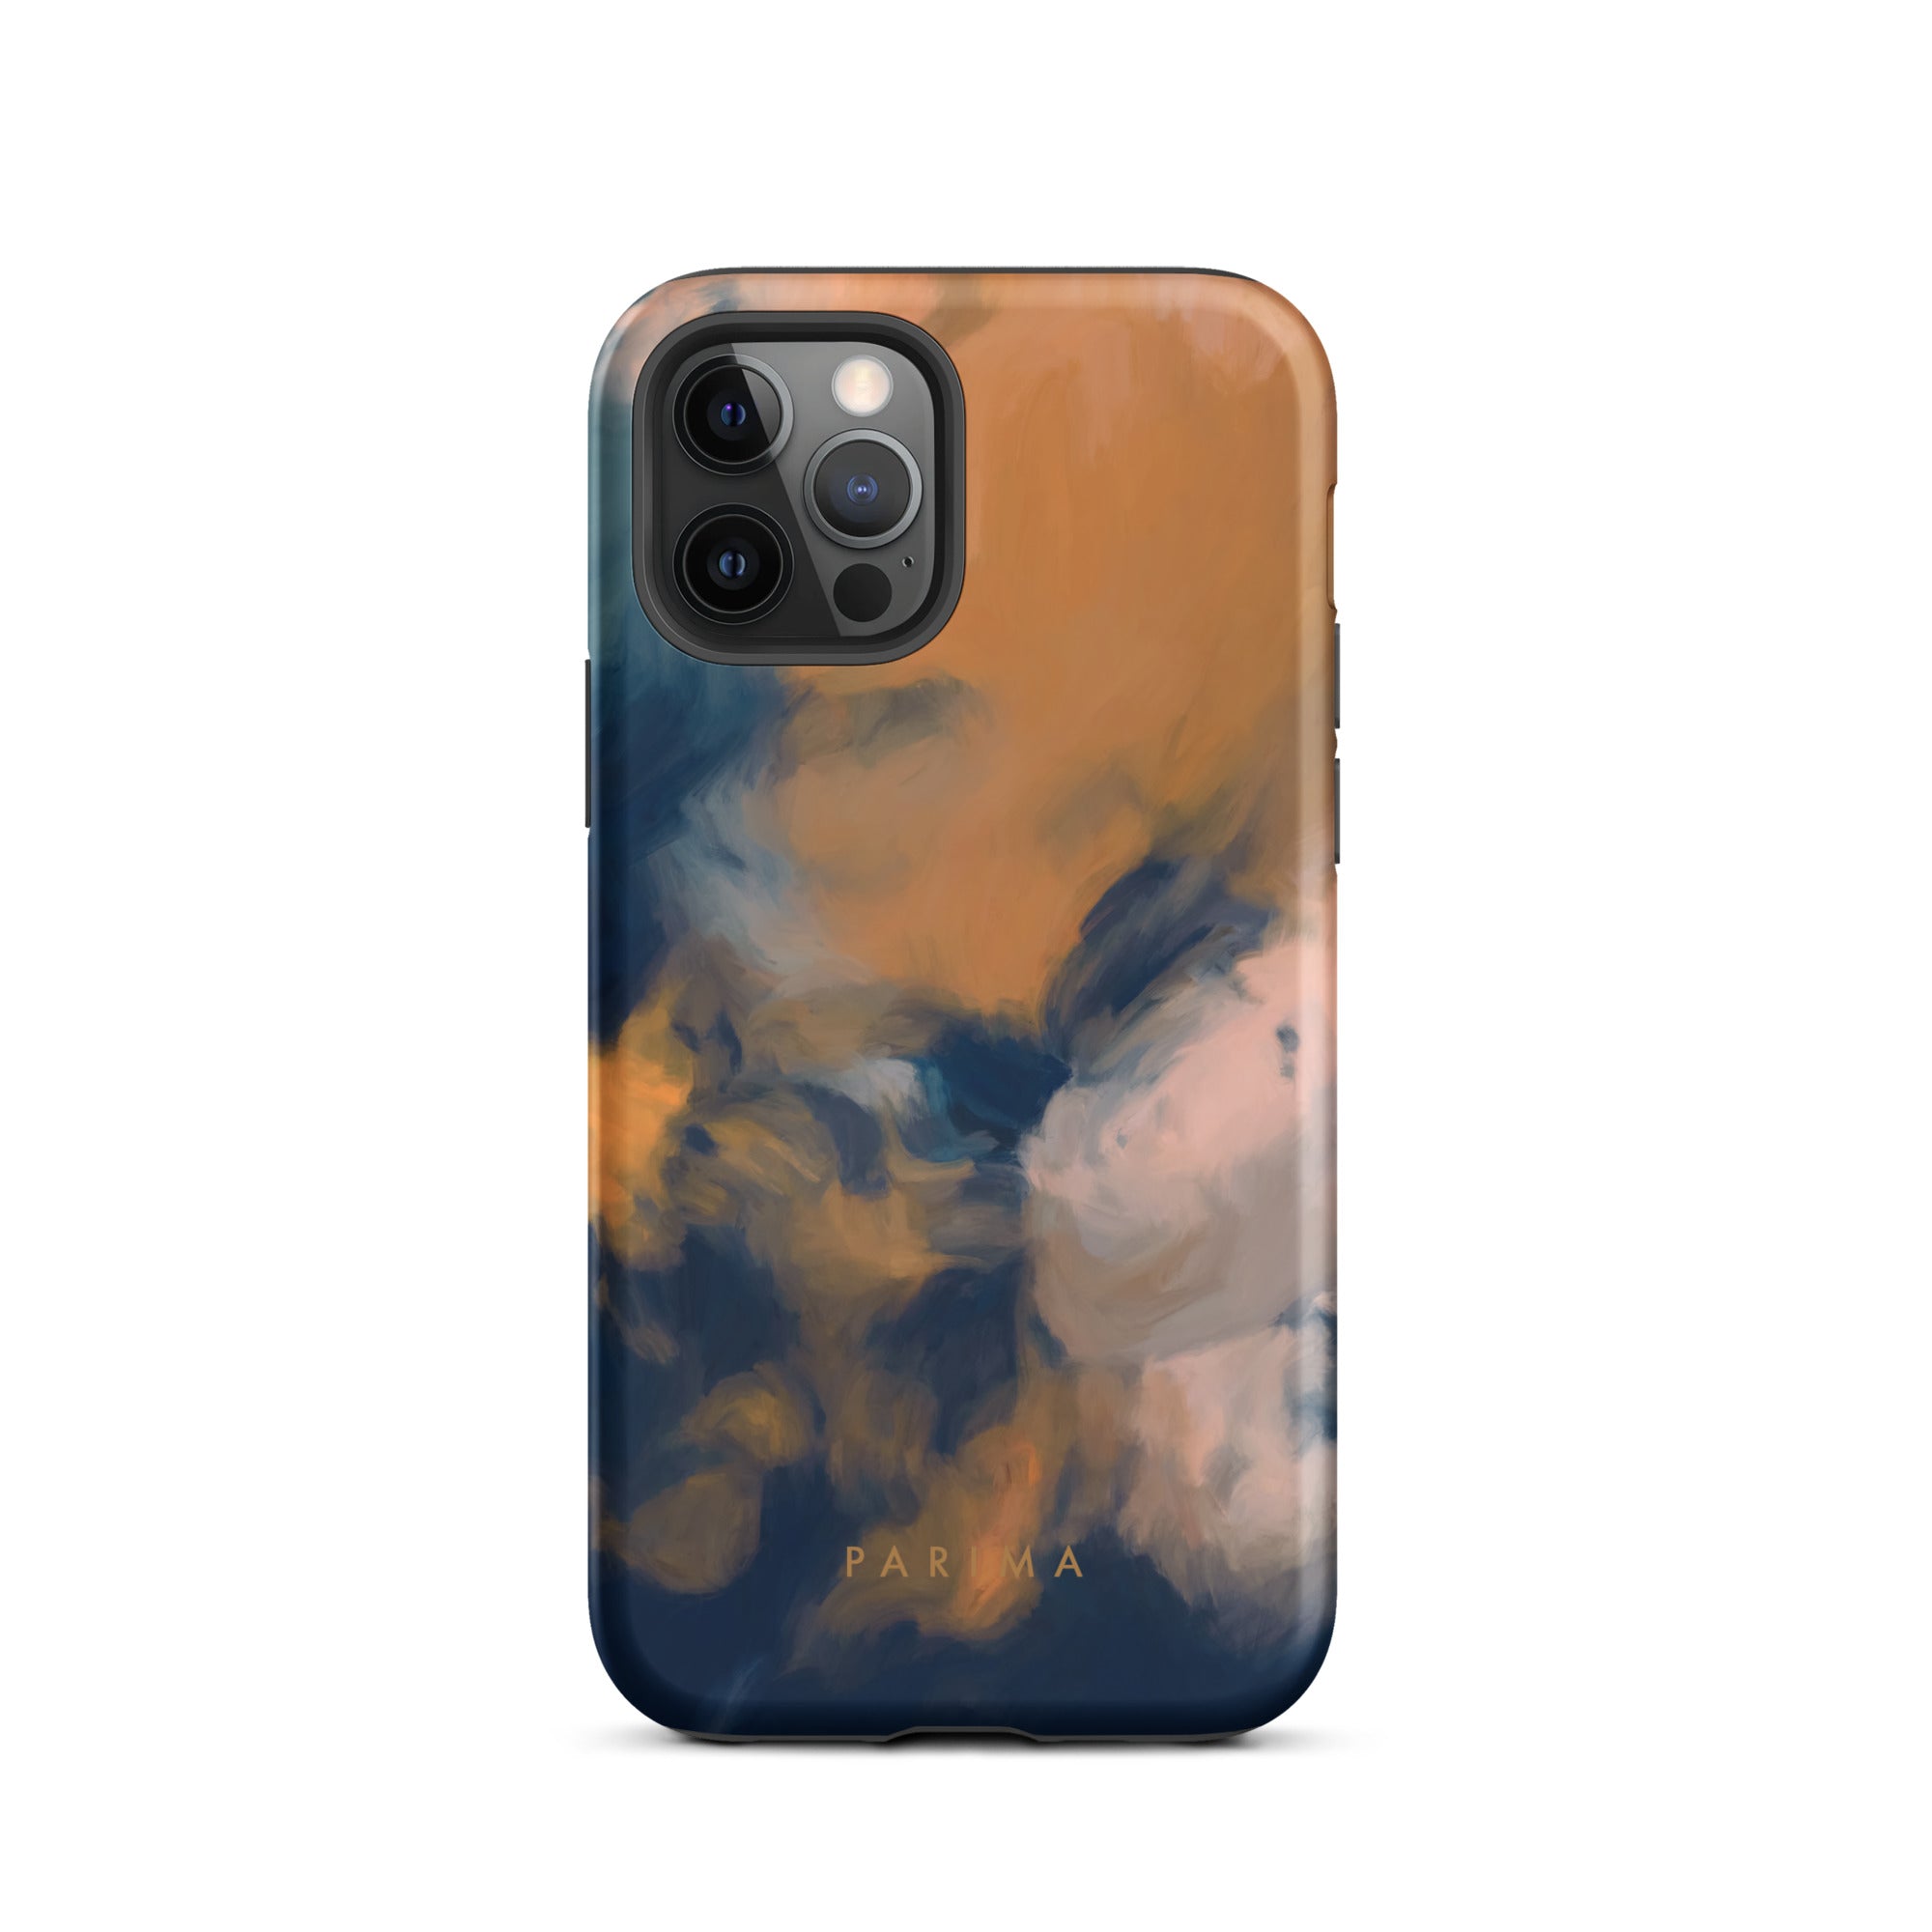 Mia Luna, blue and orange abstract art - iPhone 12 Pro tough case by Parima Studio